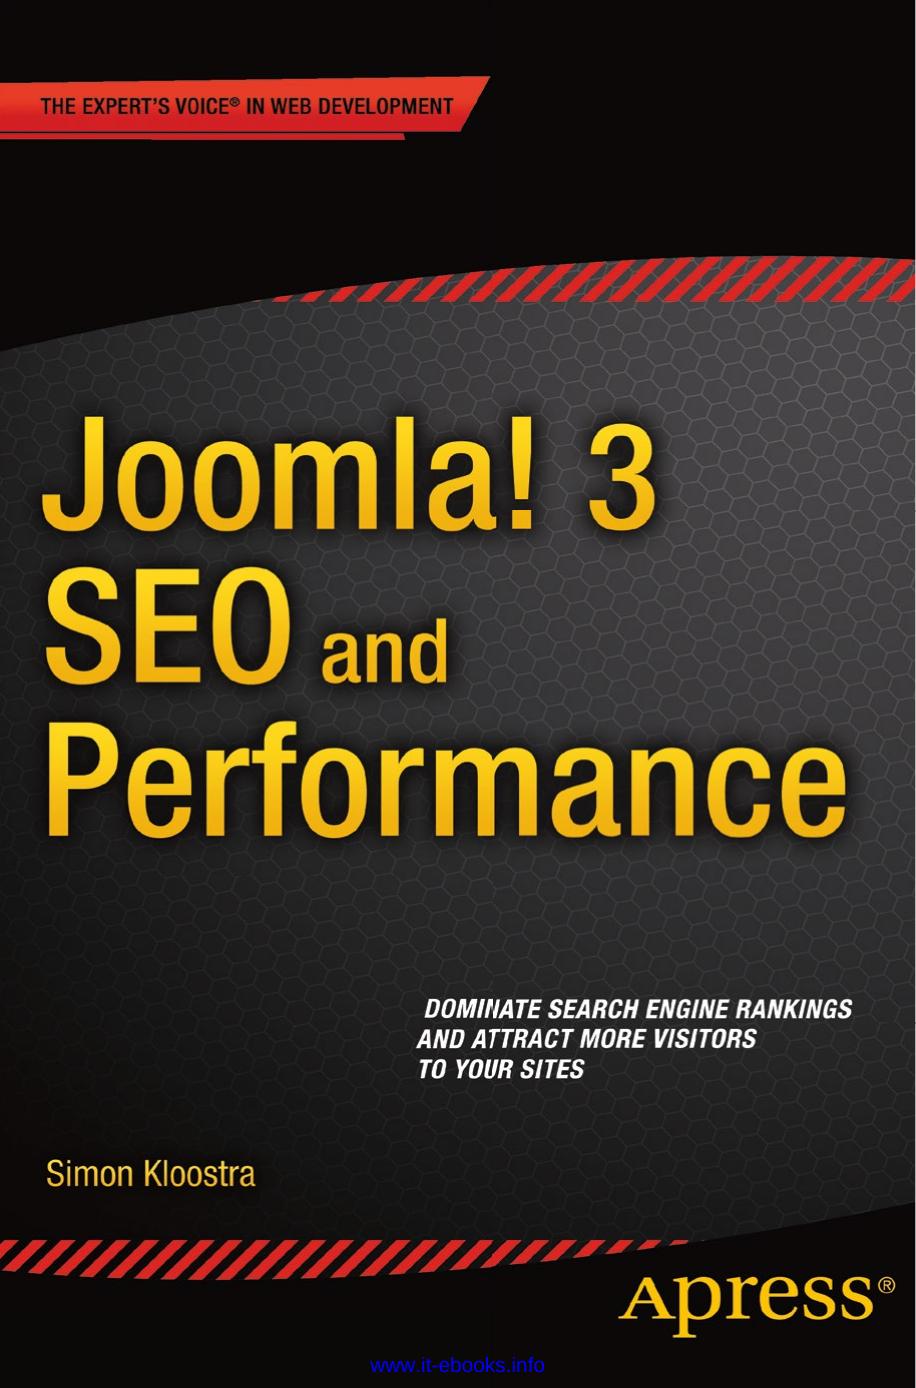 Joomla! 3 SEO and Performance by Simon Kloostra